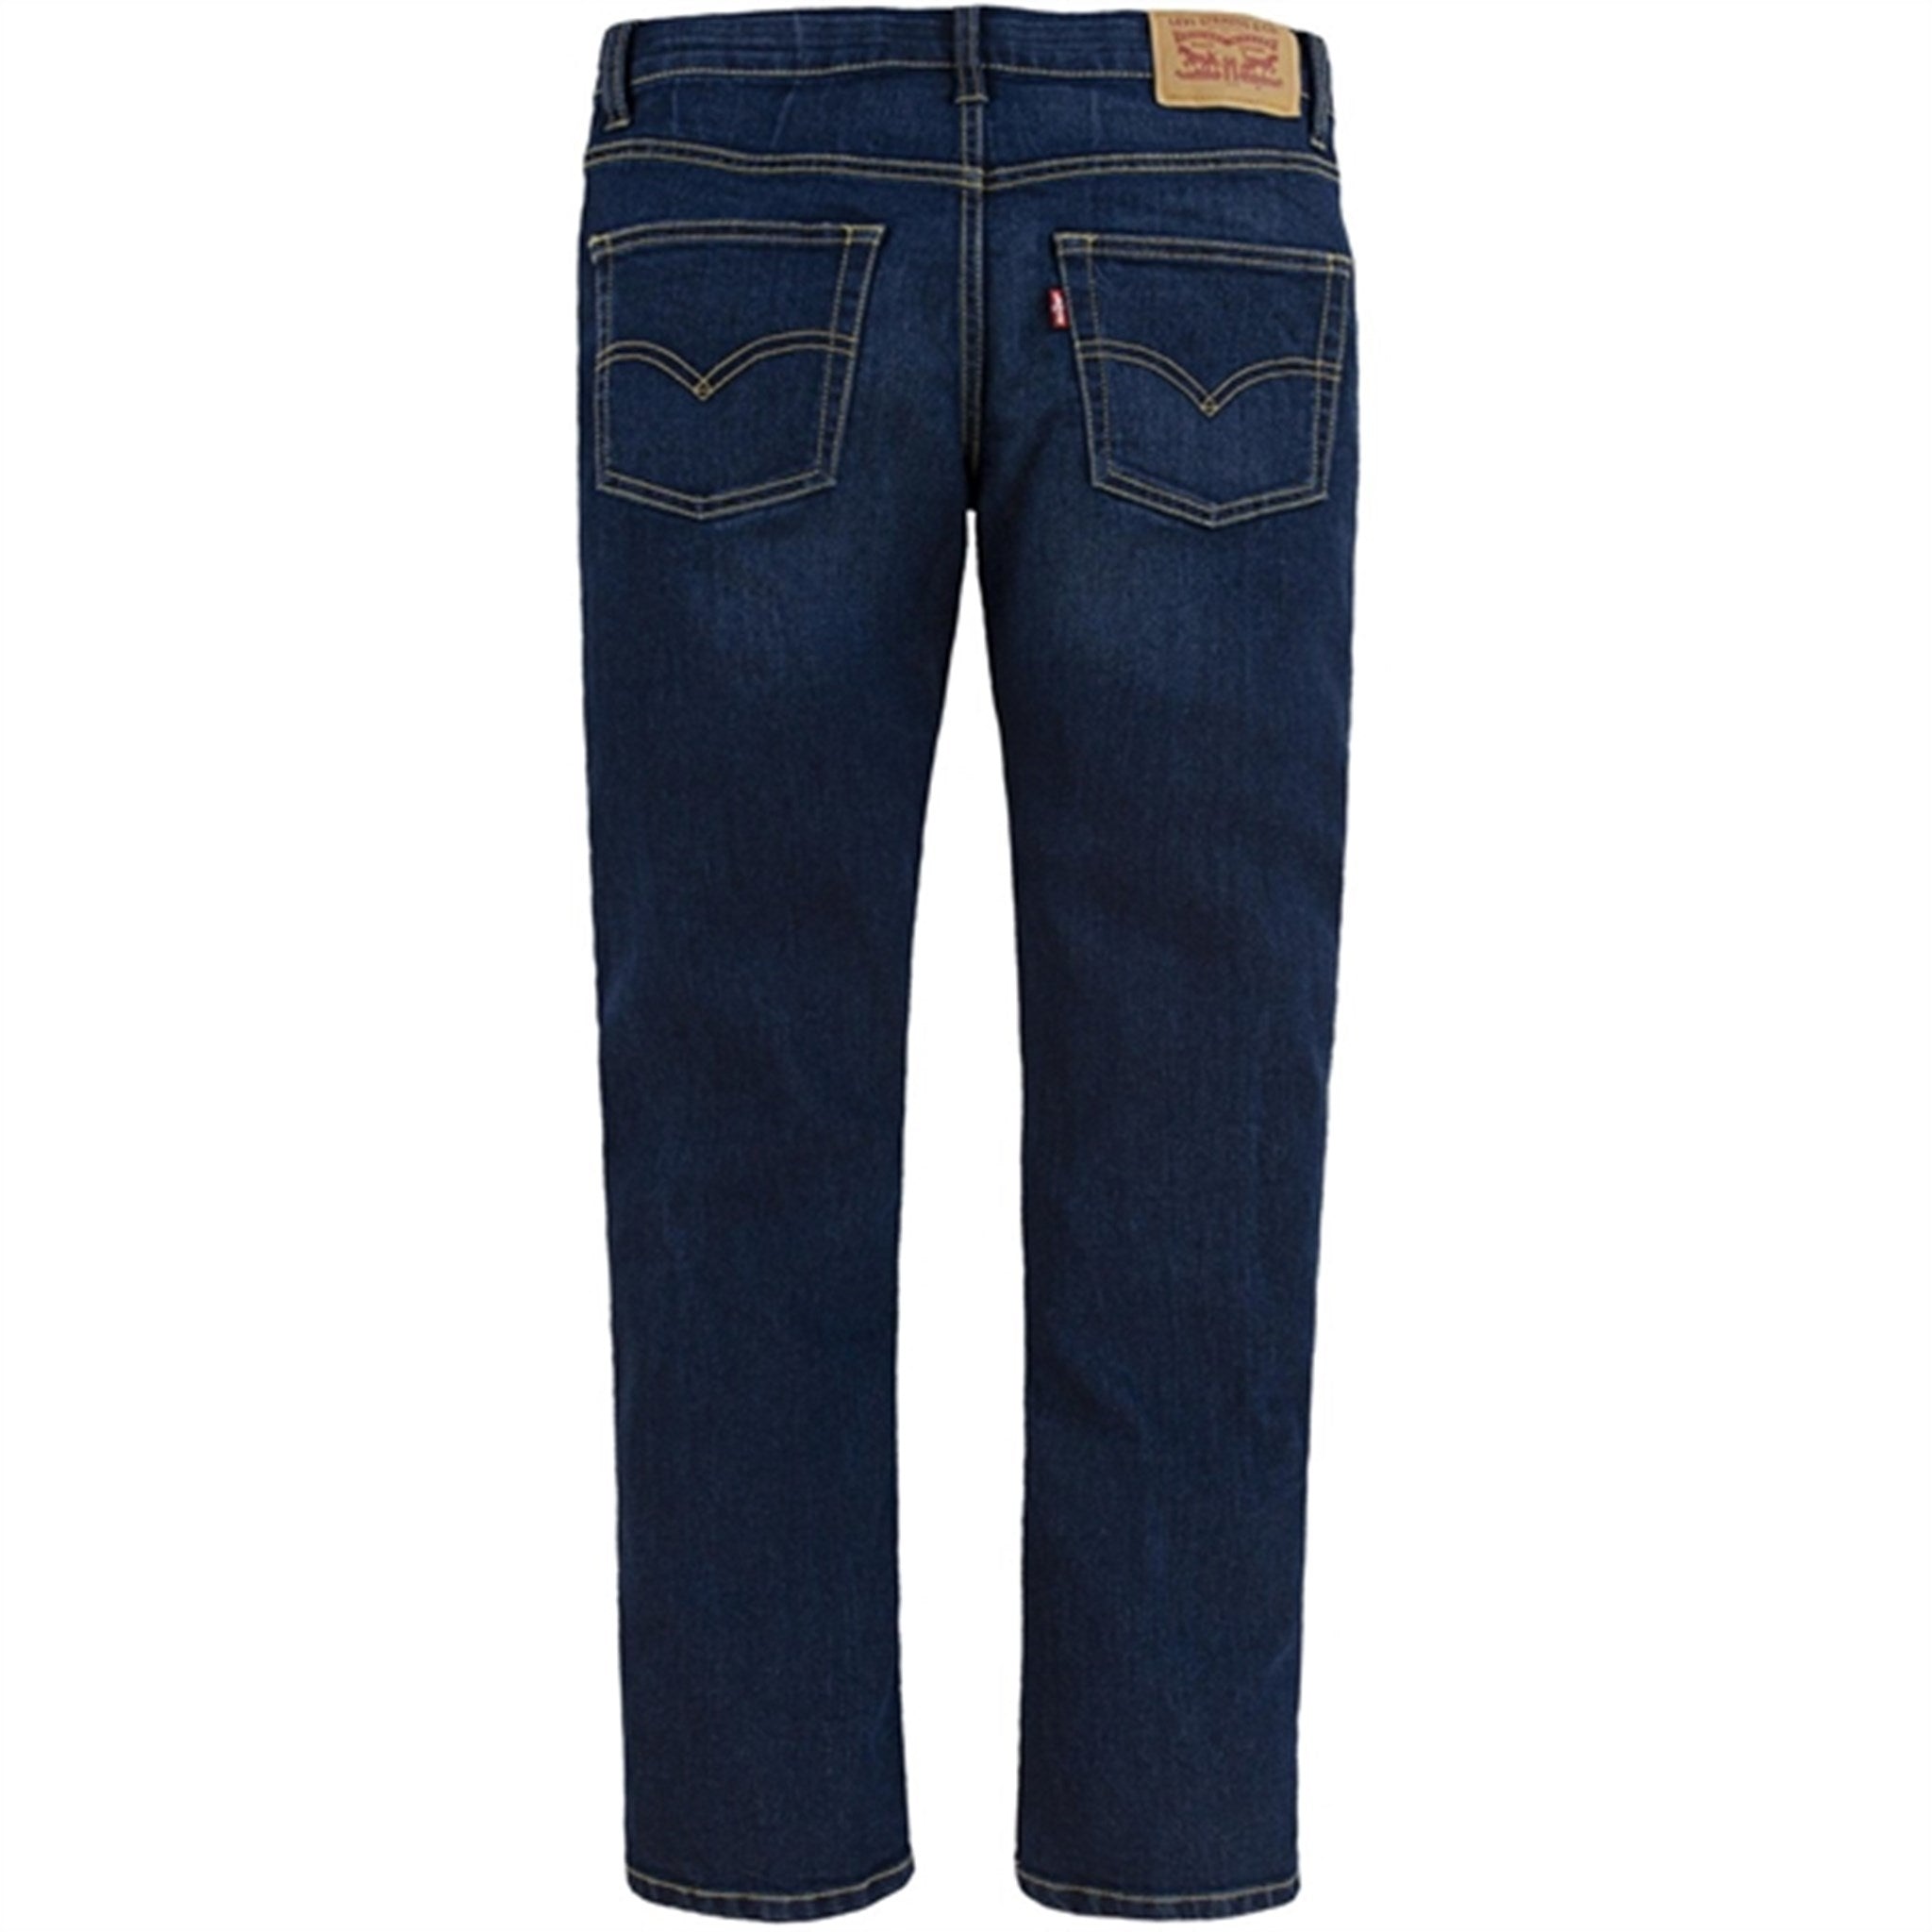 Levi's 511 Slim Fit Jeans Rushmore